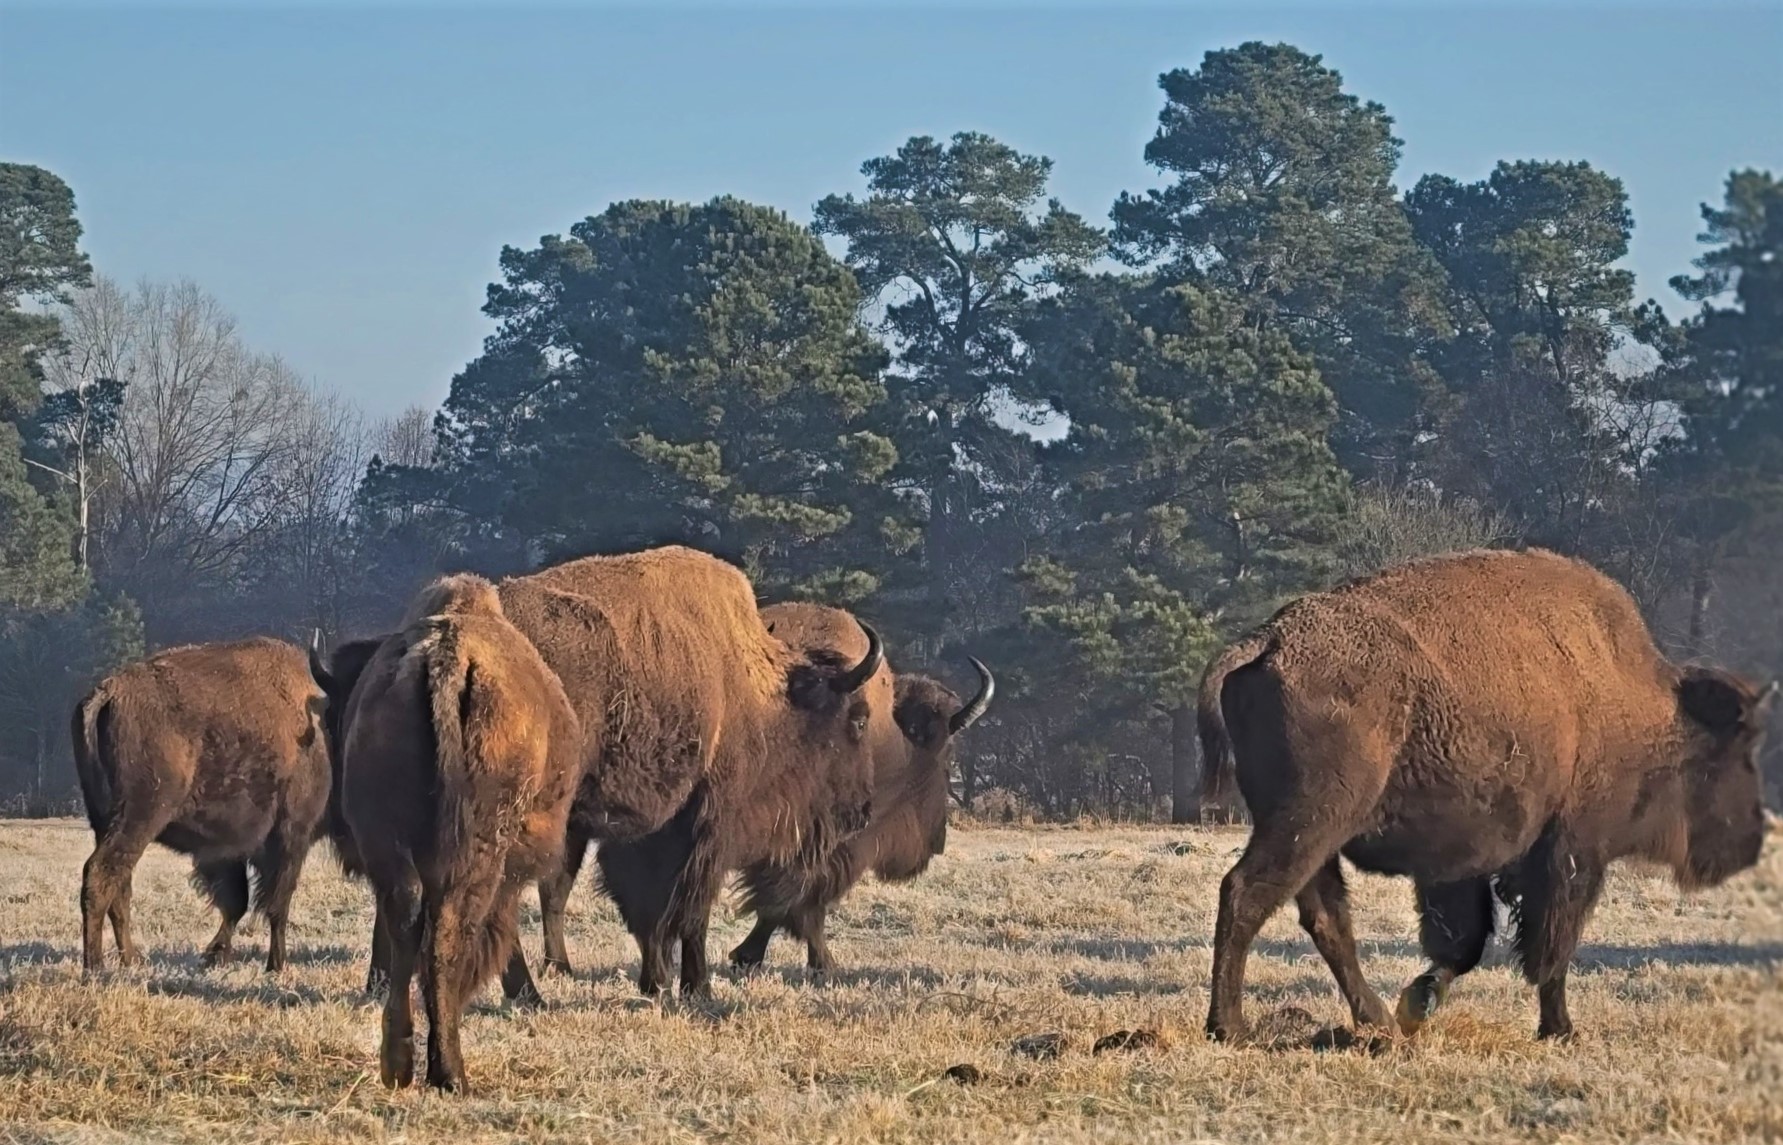 bison farm business plan